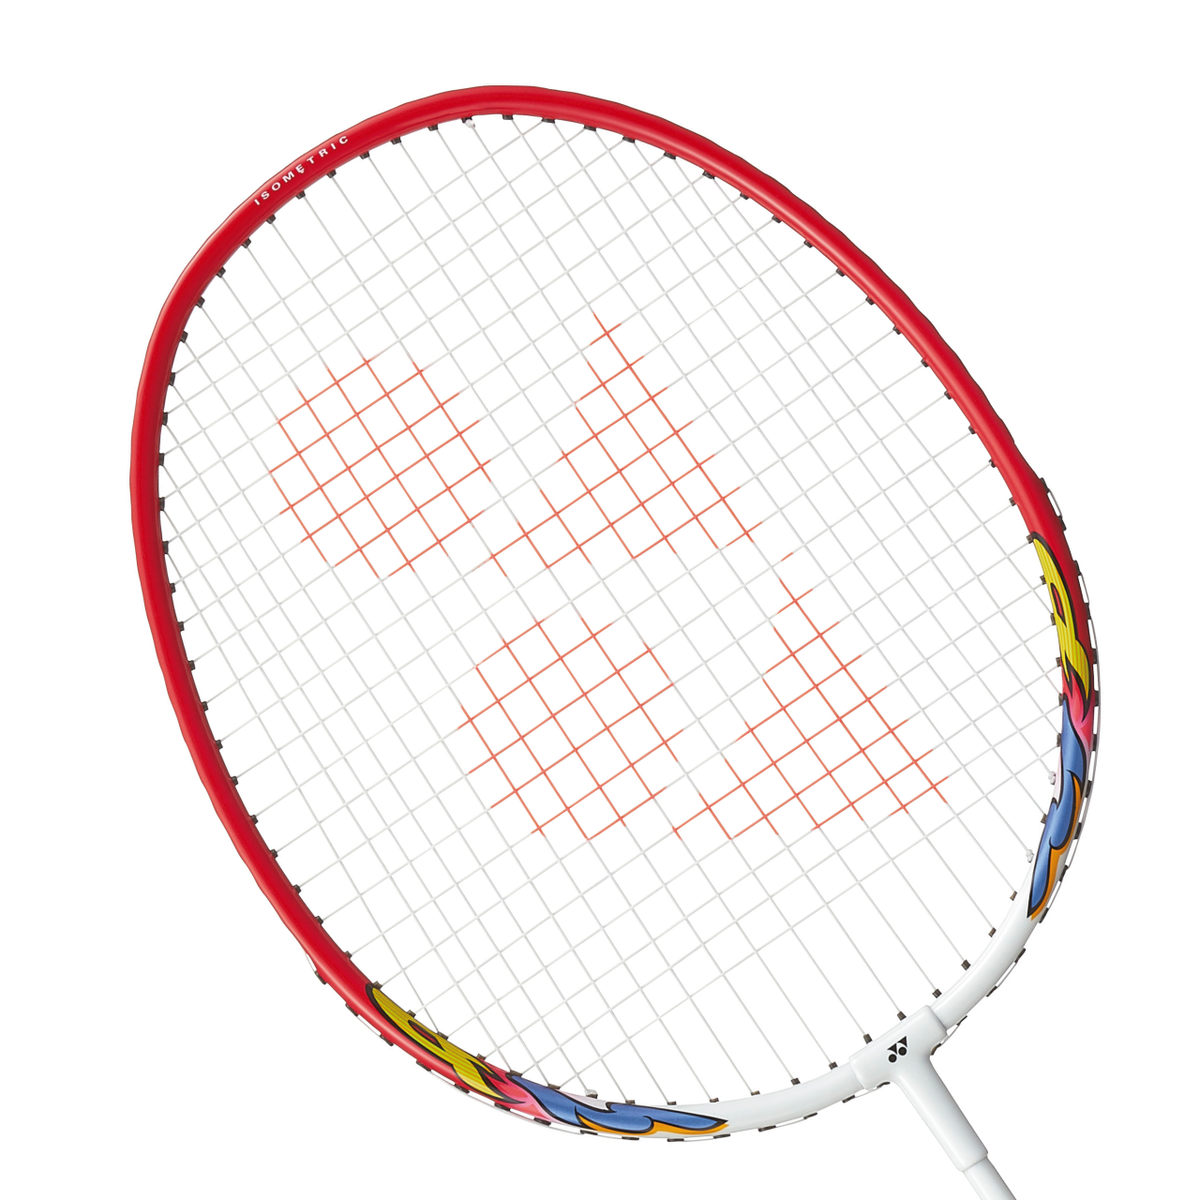 Yonex Muscle Power 1 Badminton Racket (White/Red)